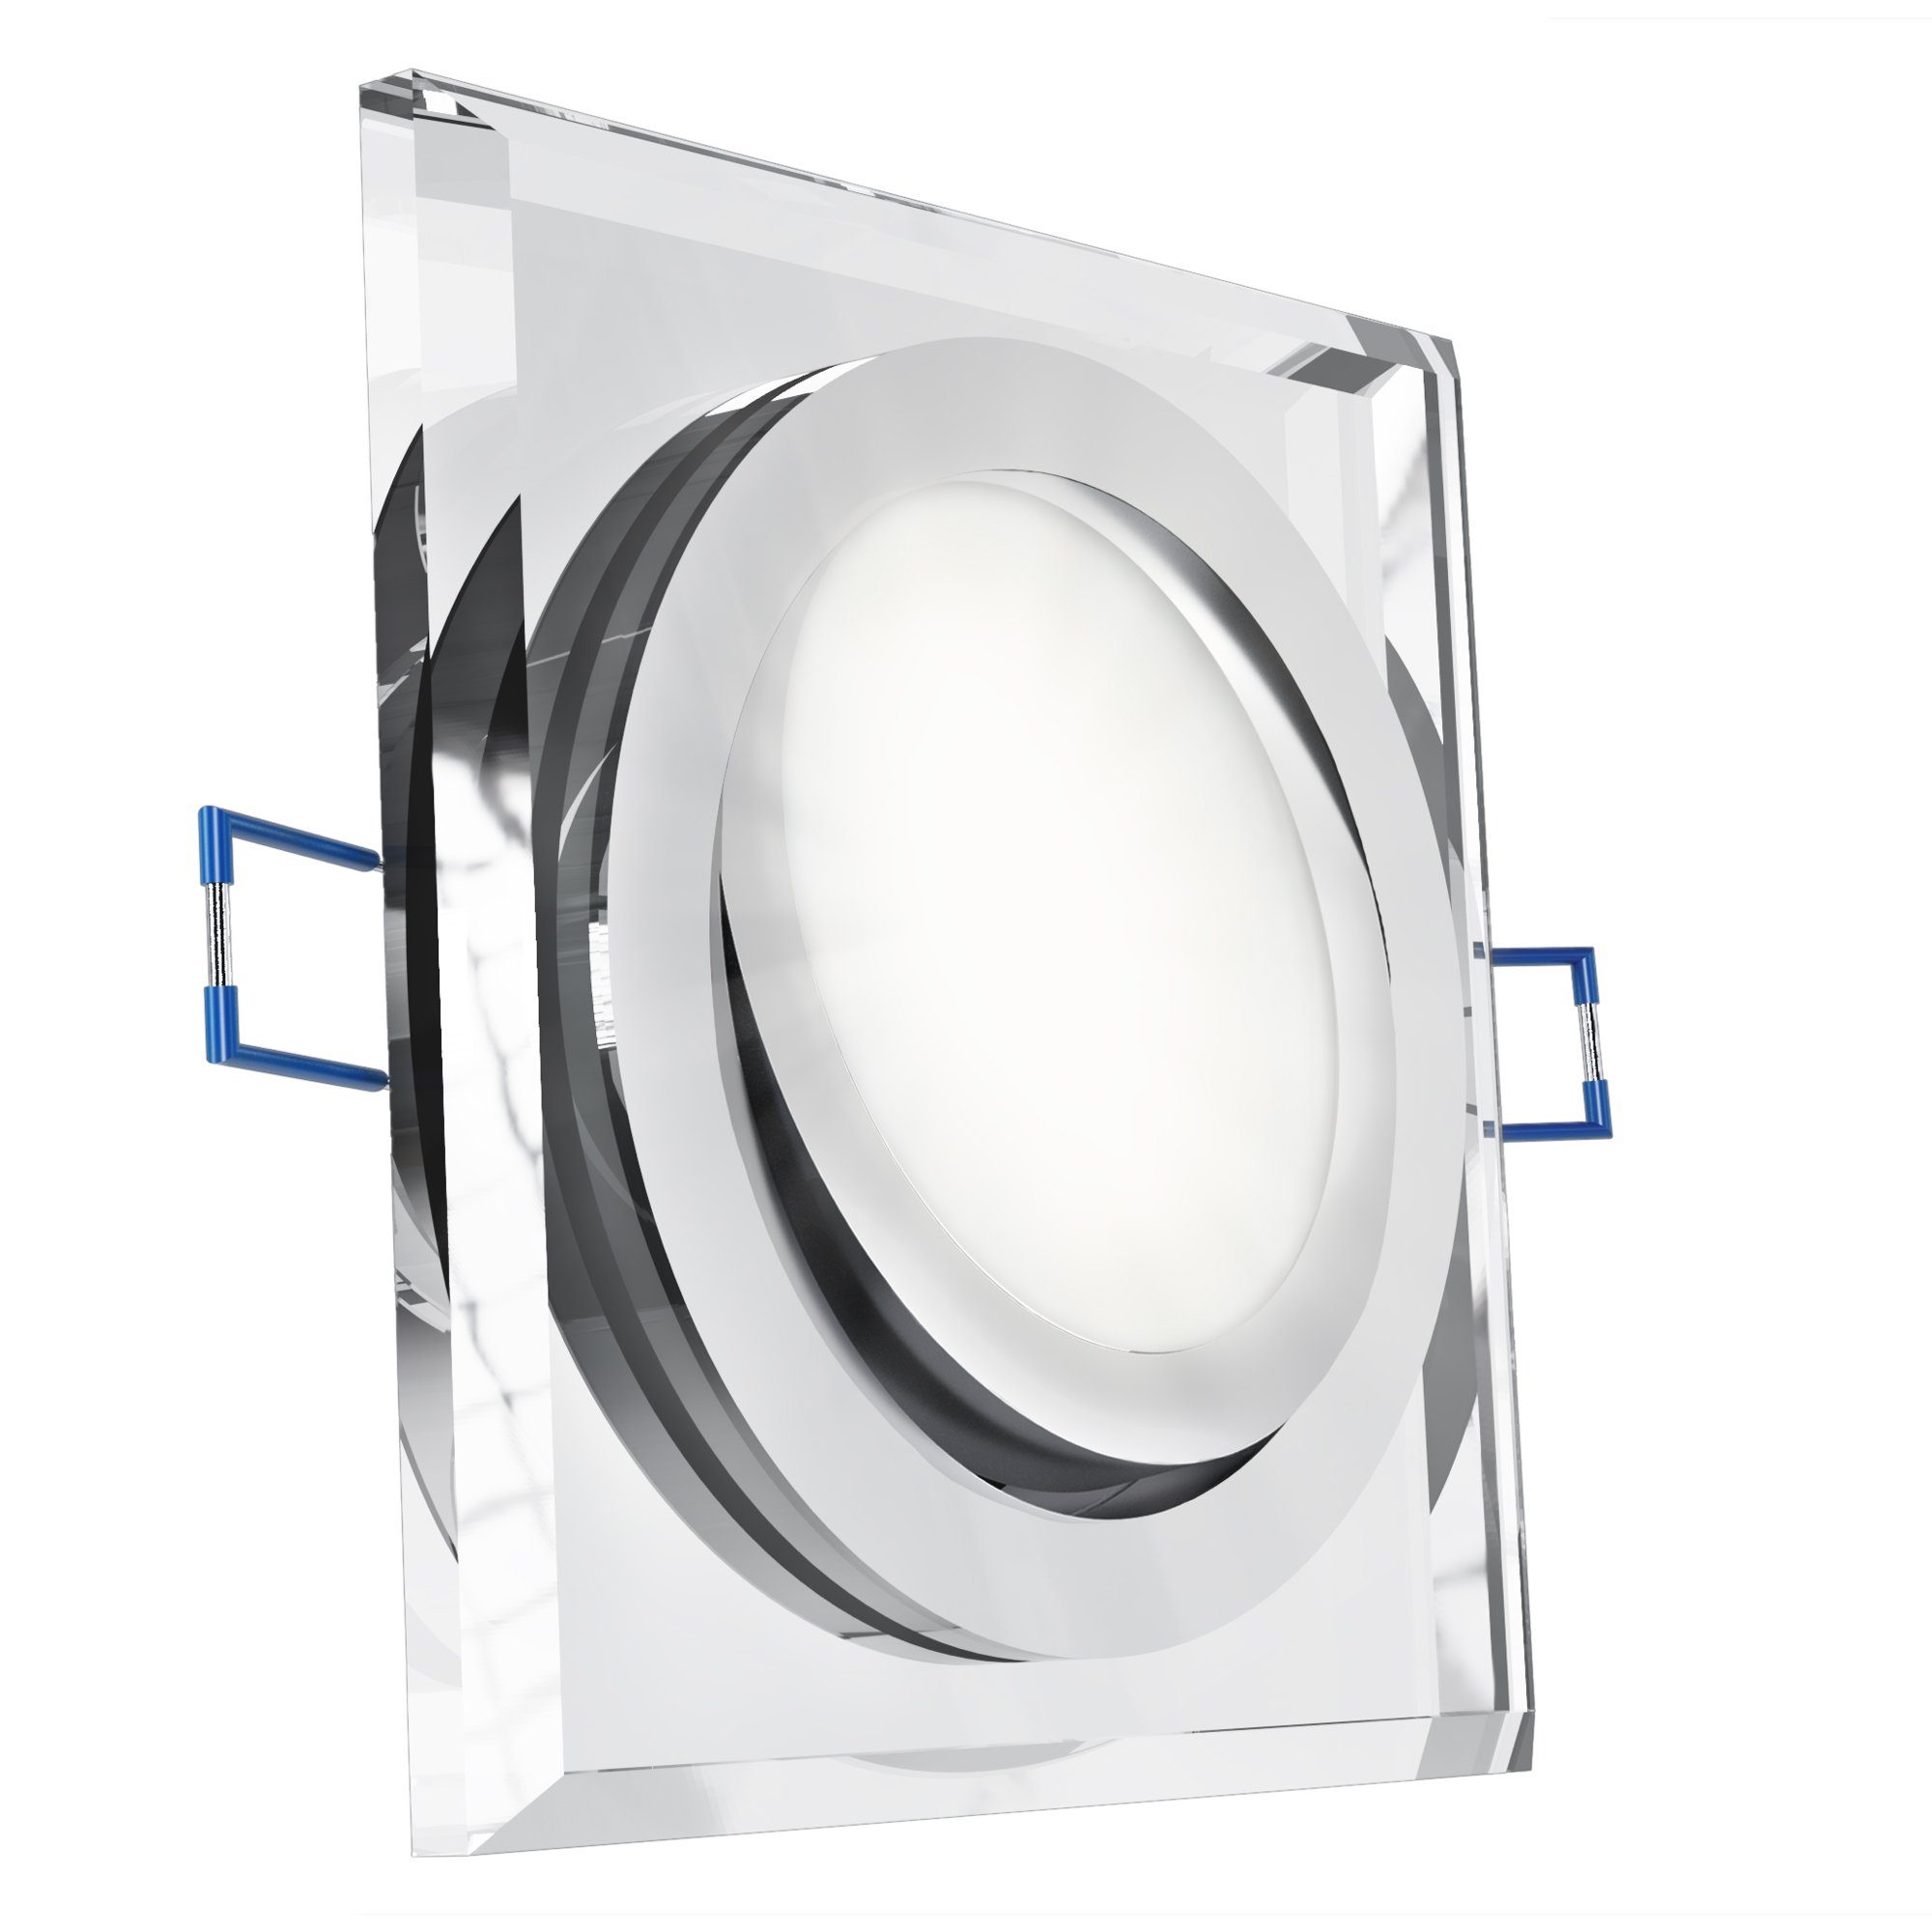 SSC-LUXon LED Einbaustrahler Flache Glas LED Einbaulampe schwenkbar eckig klar LED Modul neutral, Neutralweiß